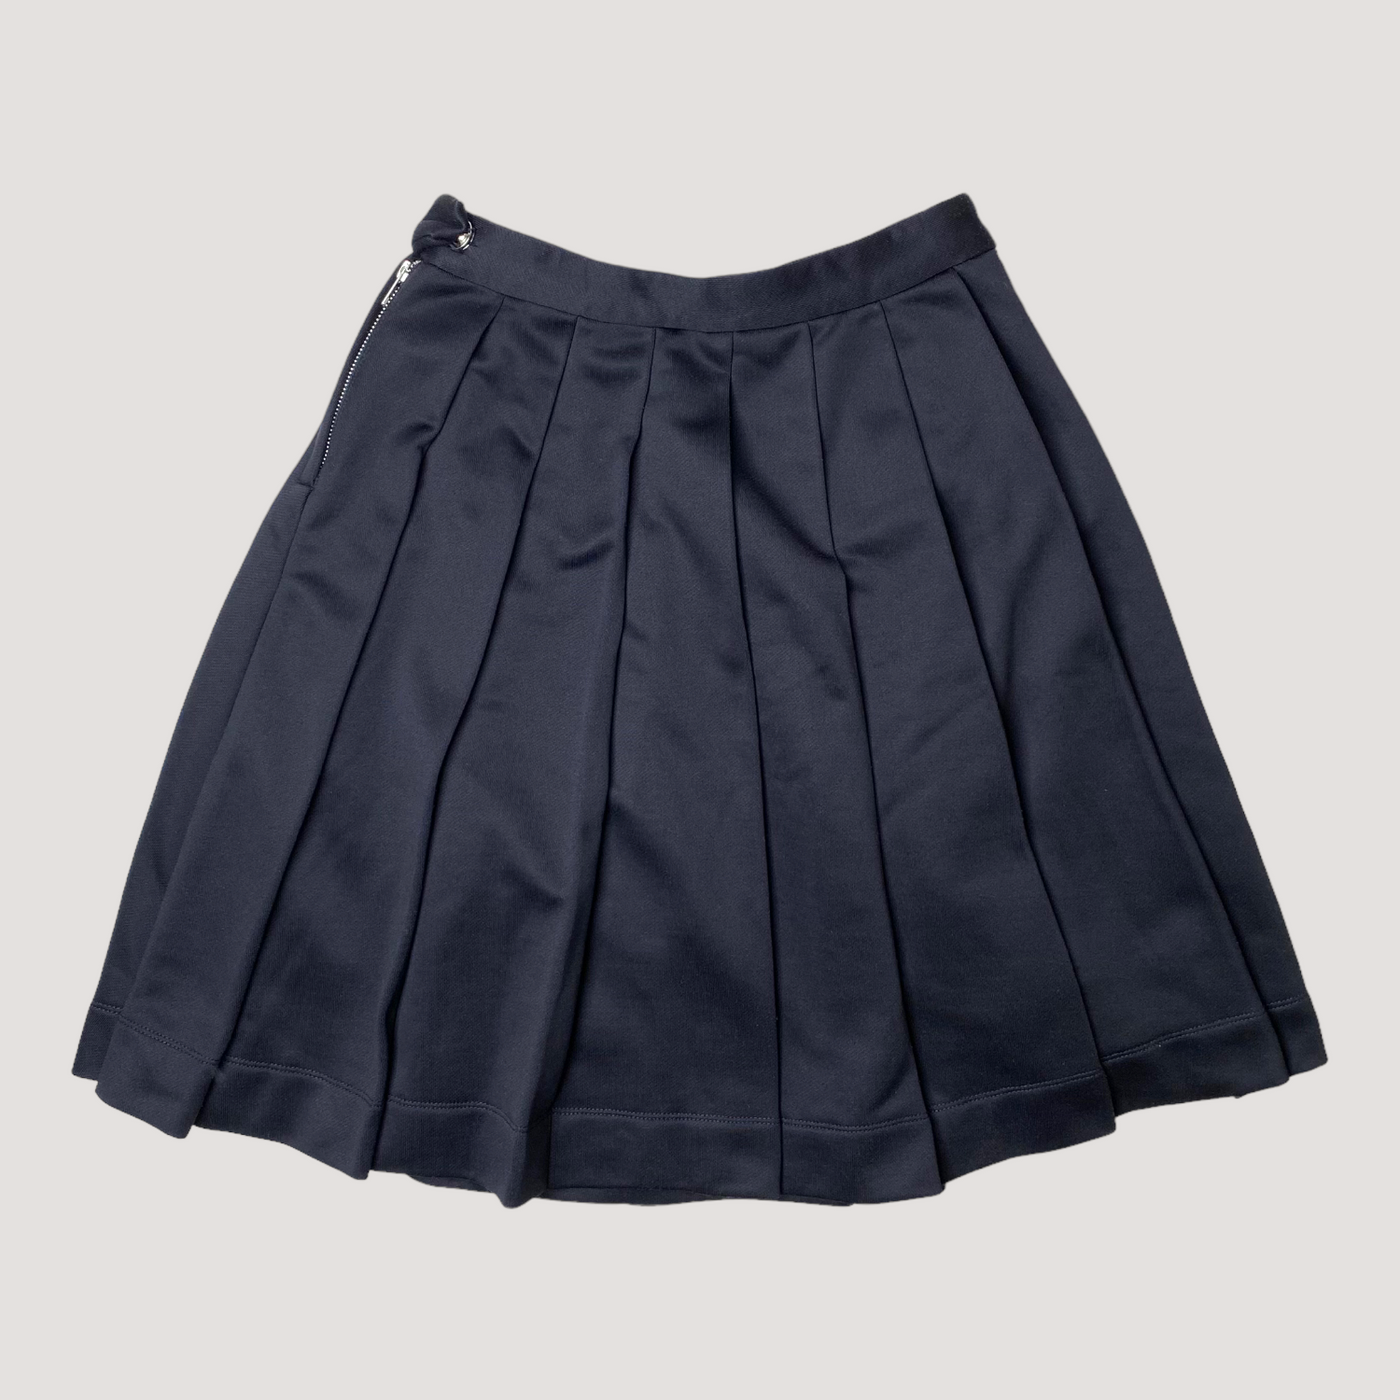 Woodwood jodie skirt, black | women M